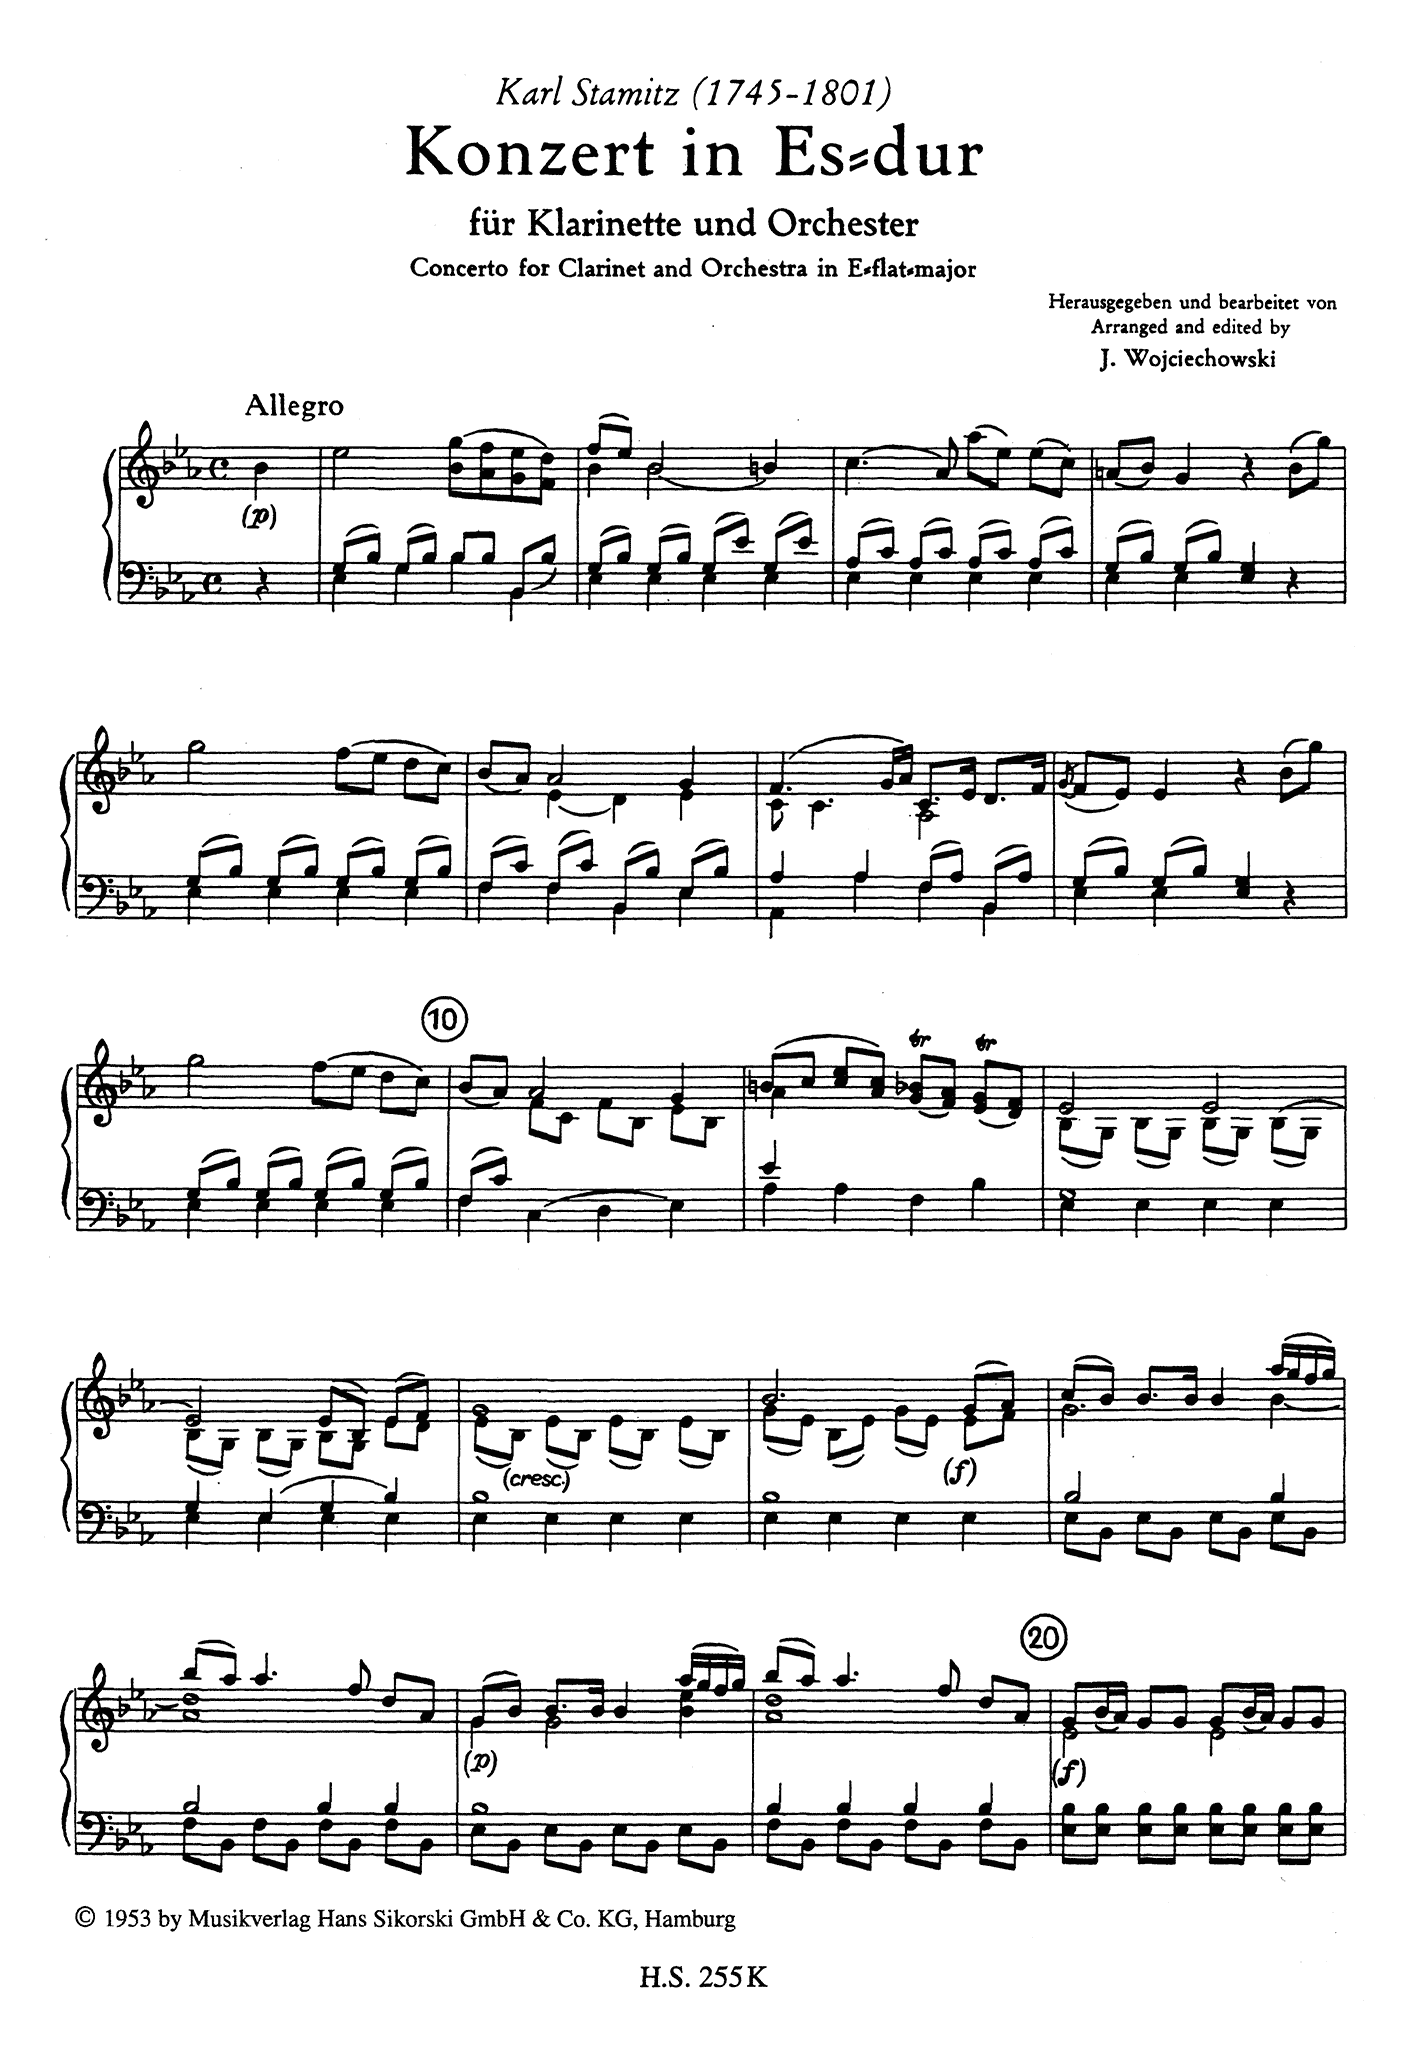 Carl Stamitz Clarinet Concerto No. 11 (Kaiser) in E-flat Major - Movement 1